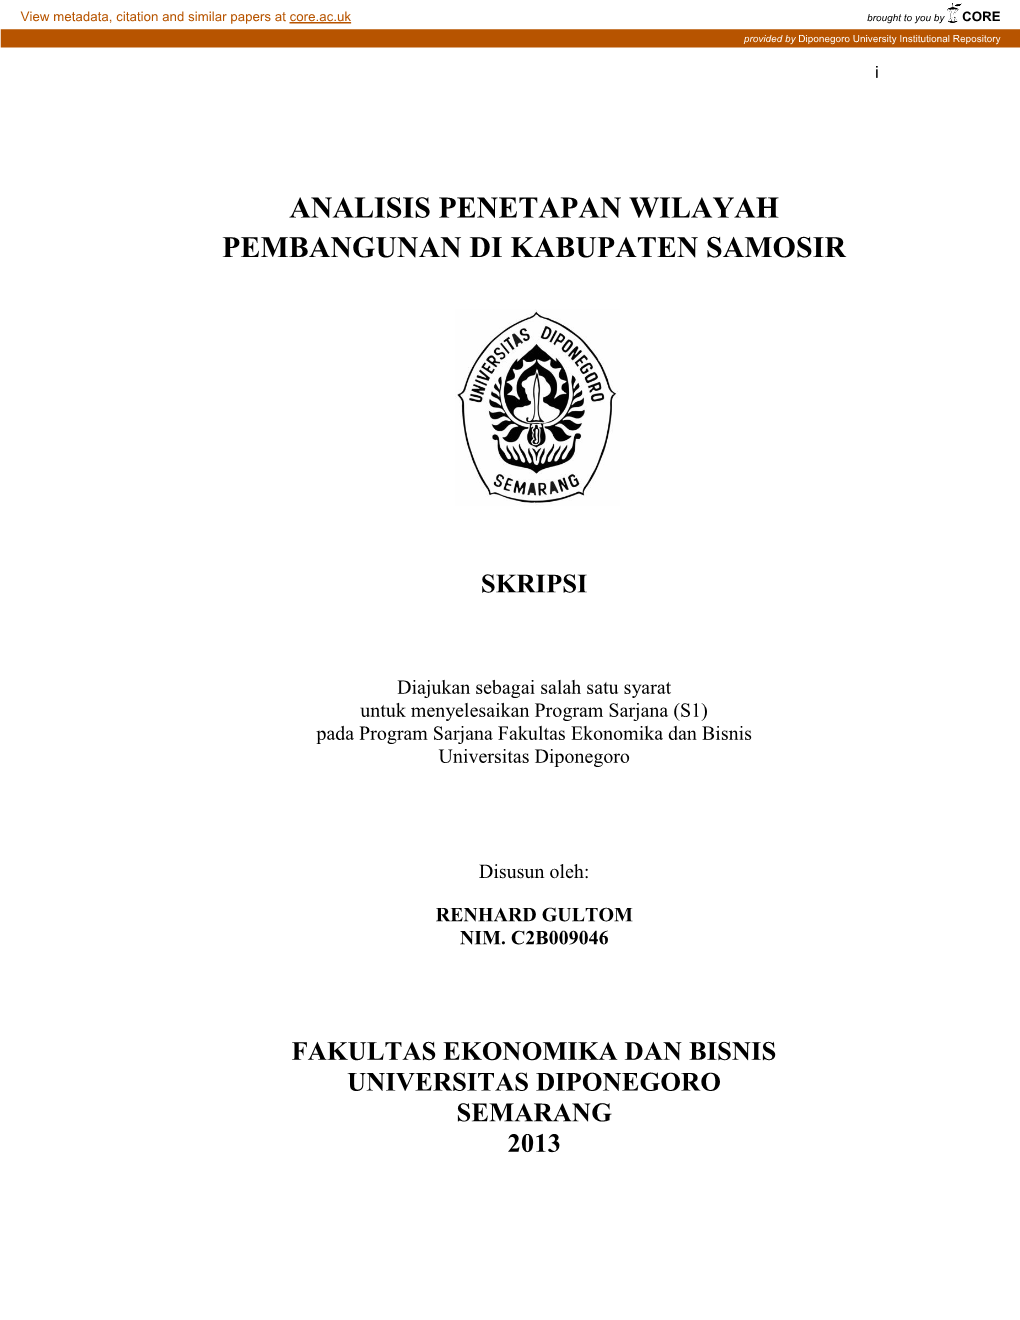 Analisis Penetapan Wilayah Pembangunan Di Kabupaten Samosir